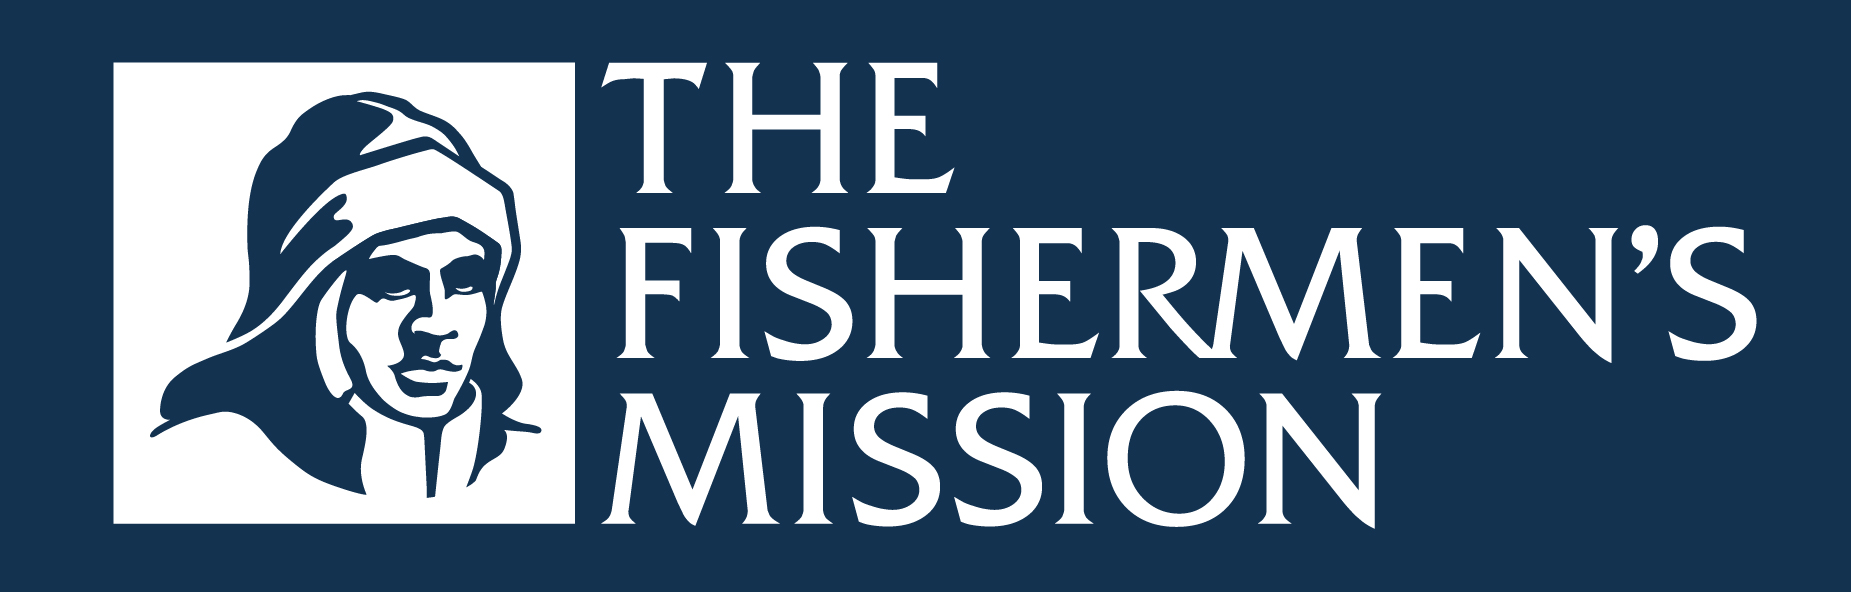 the fishermen's mission